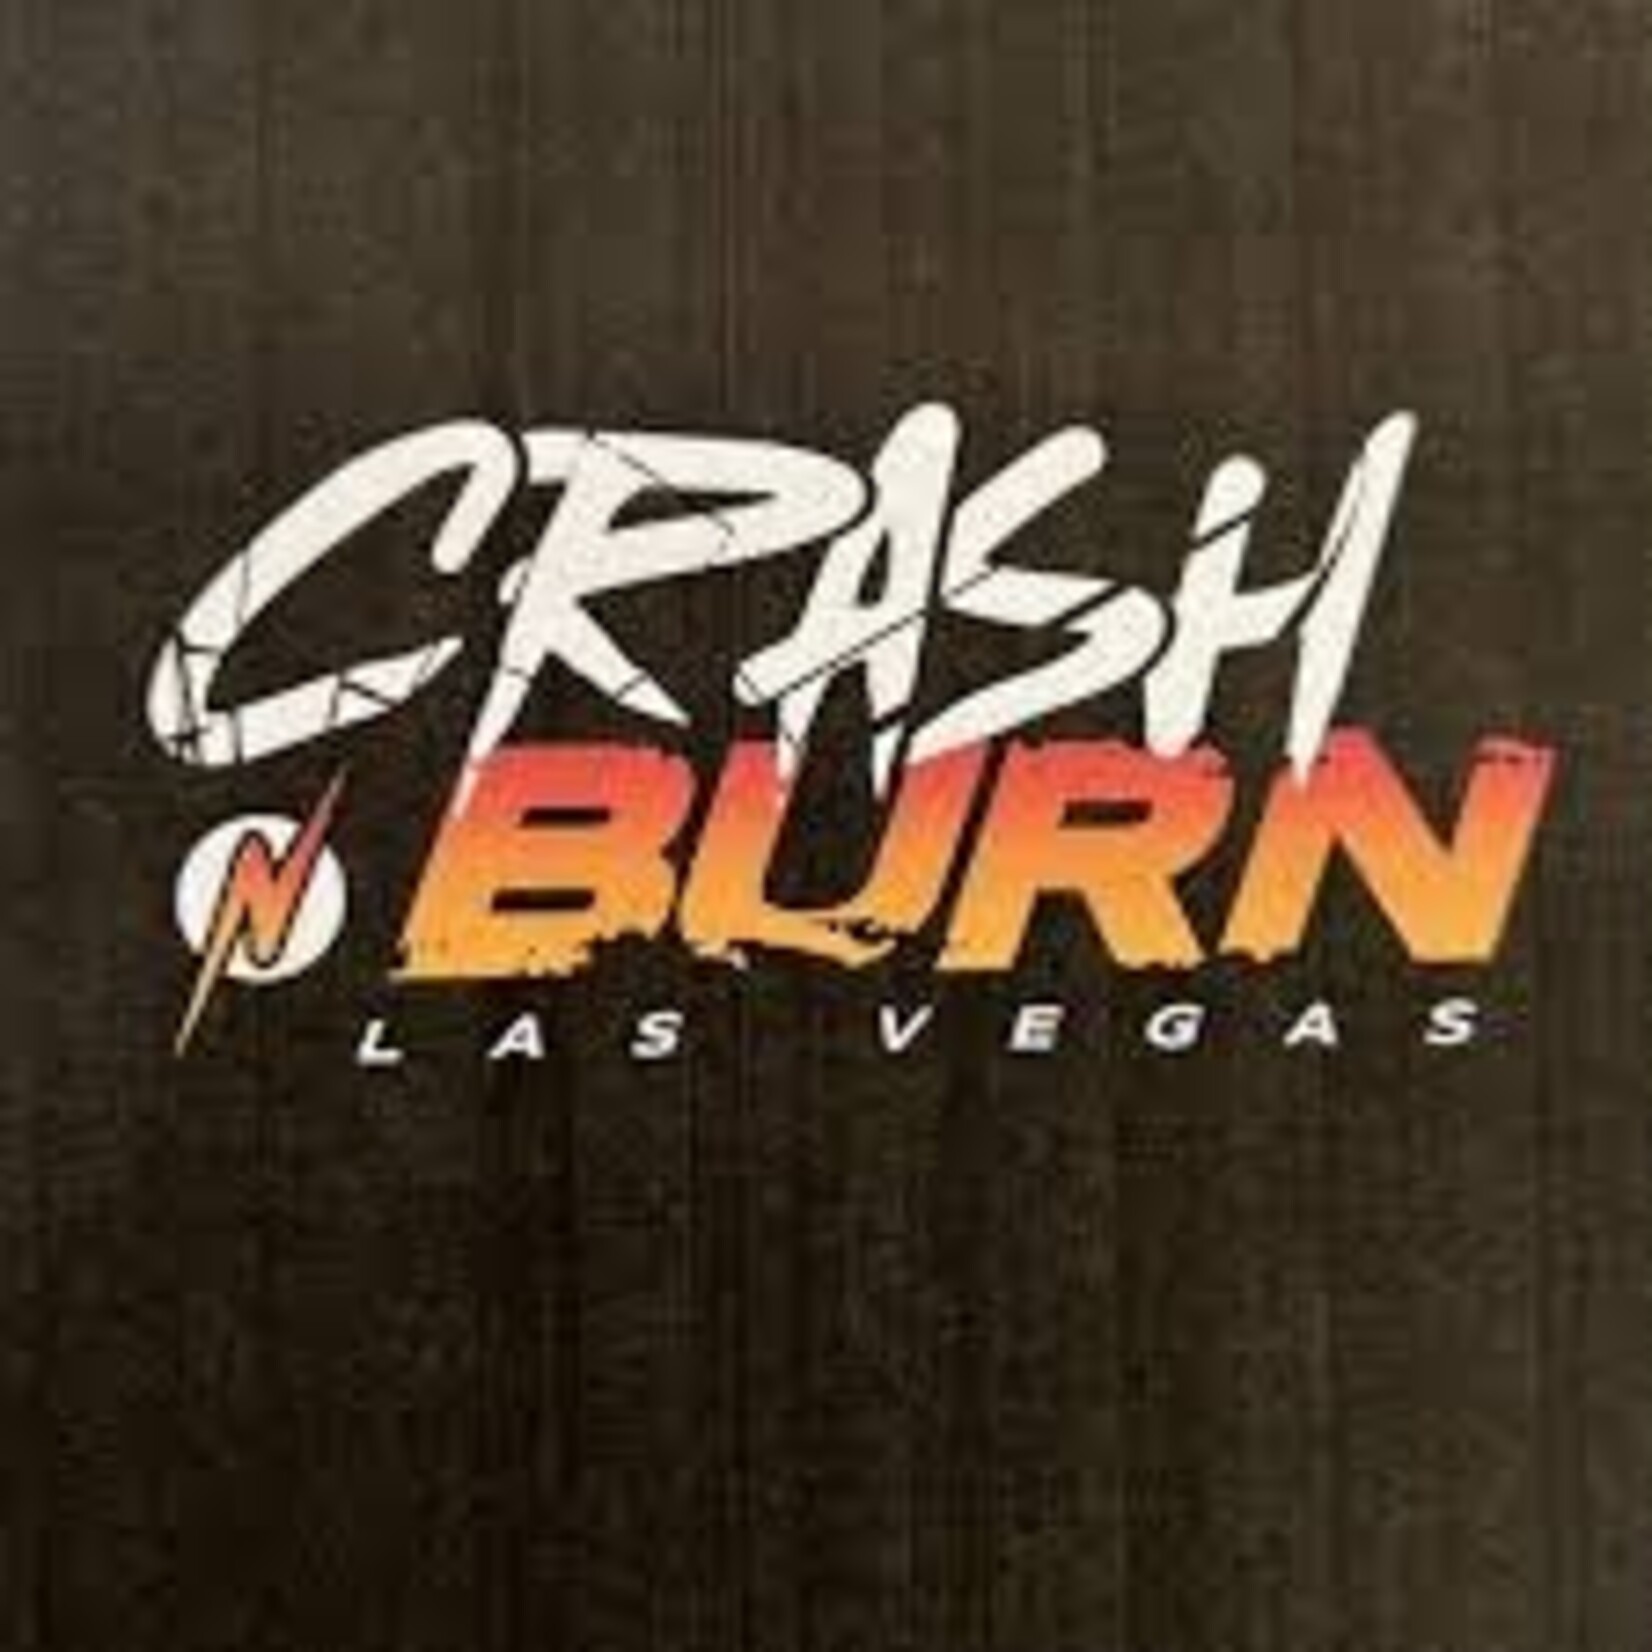 Crash N Burn LV Crash N Burn Las Vegas - $25 Gift Card